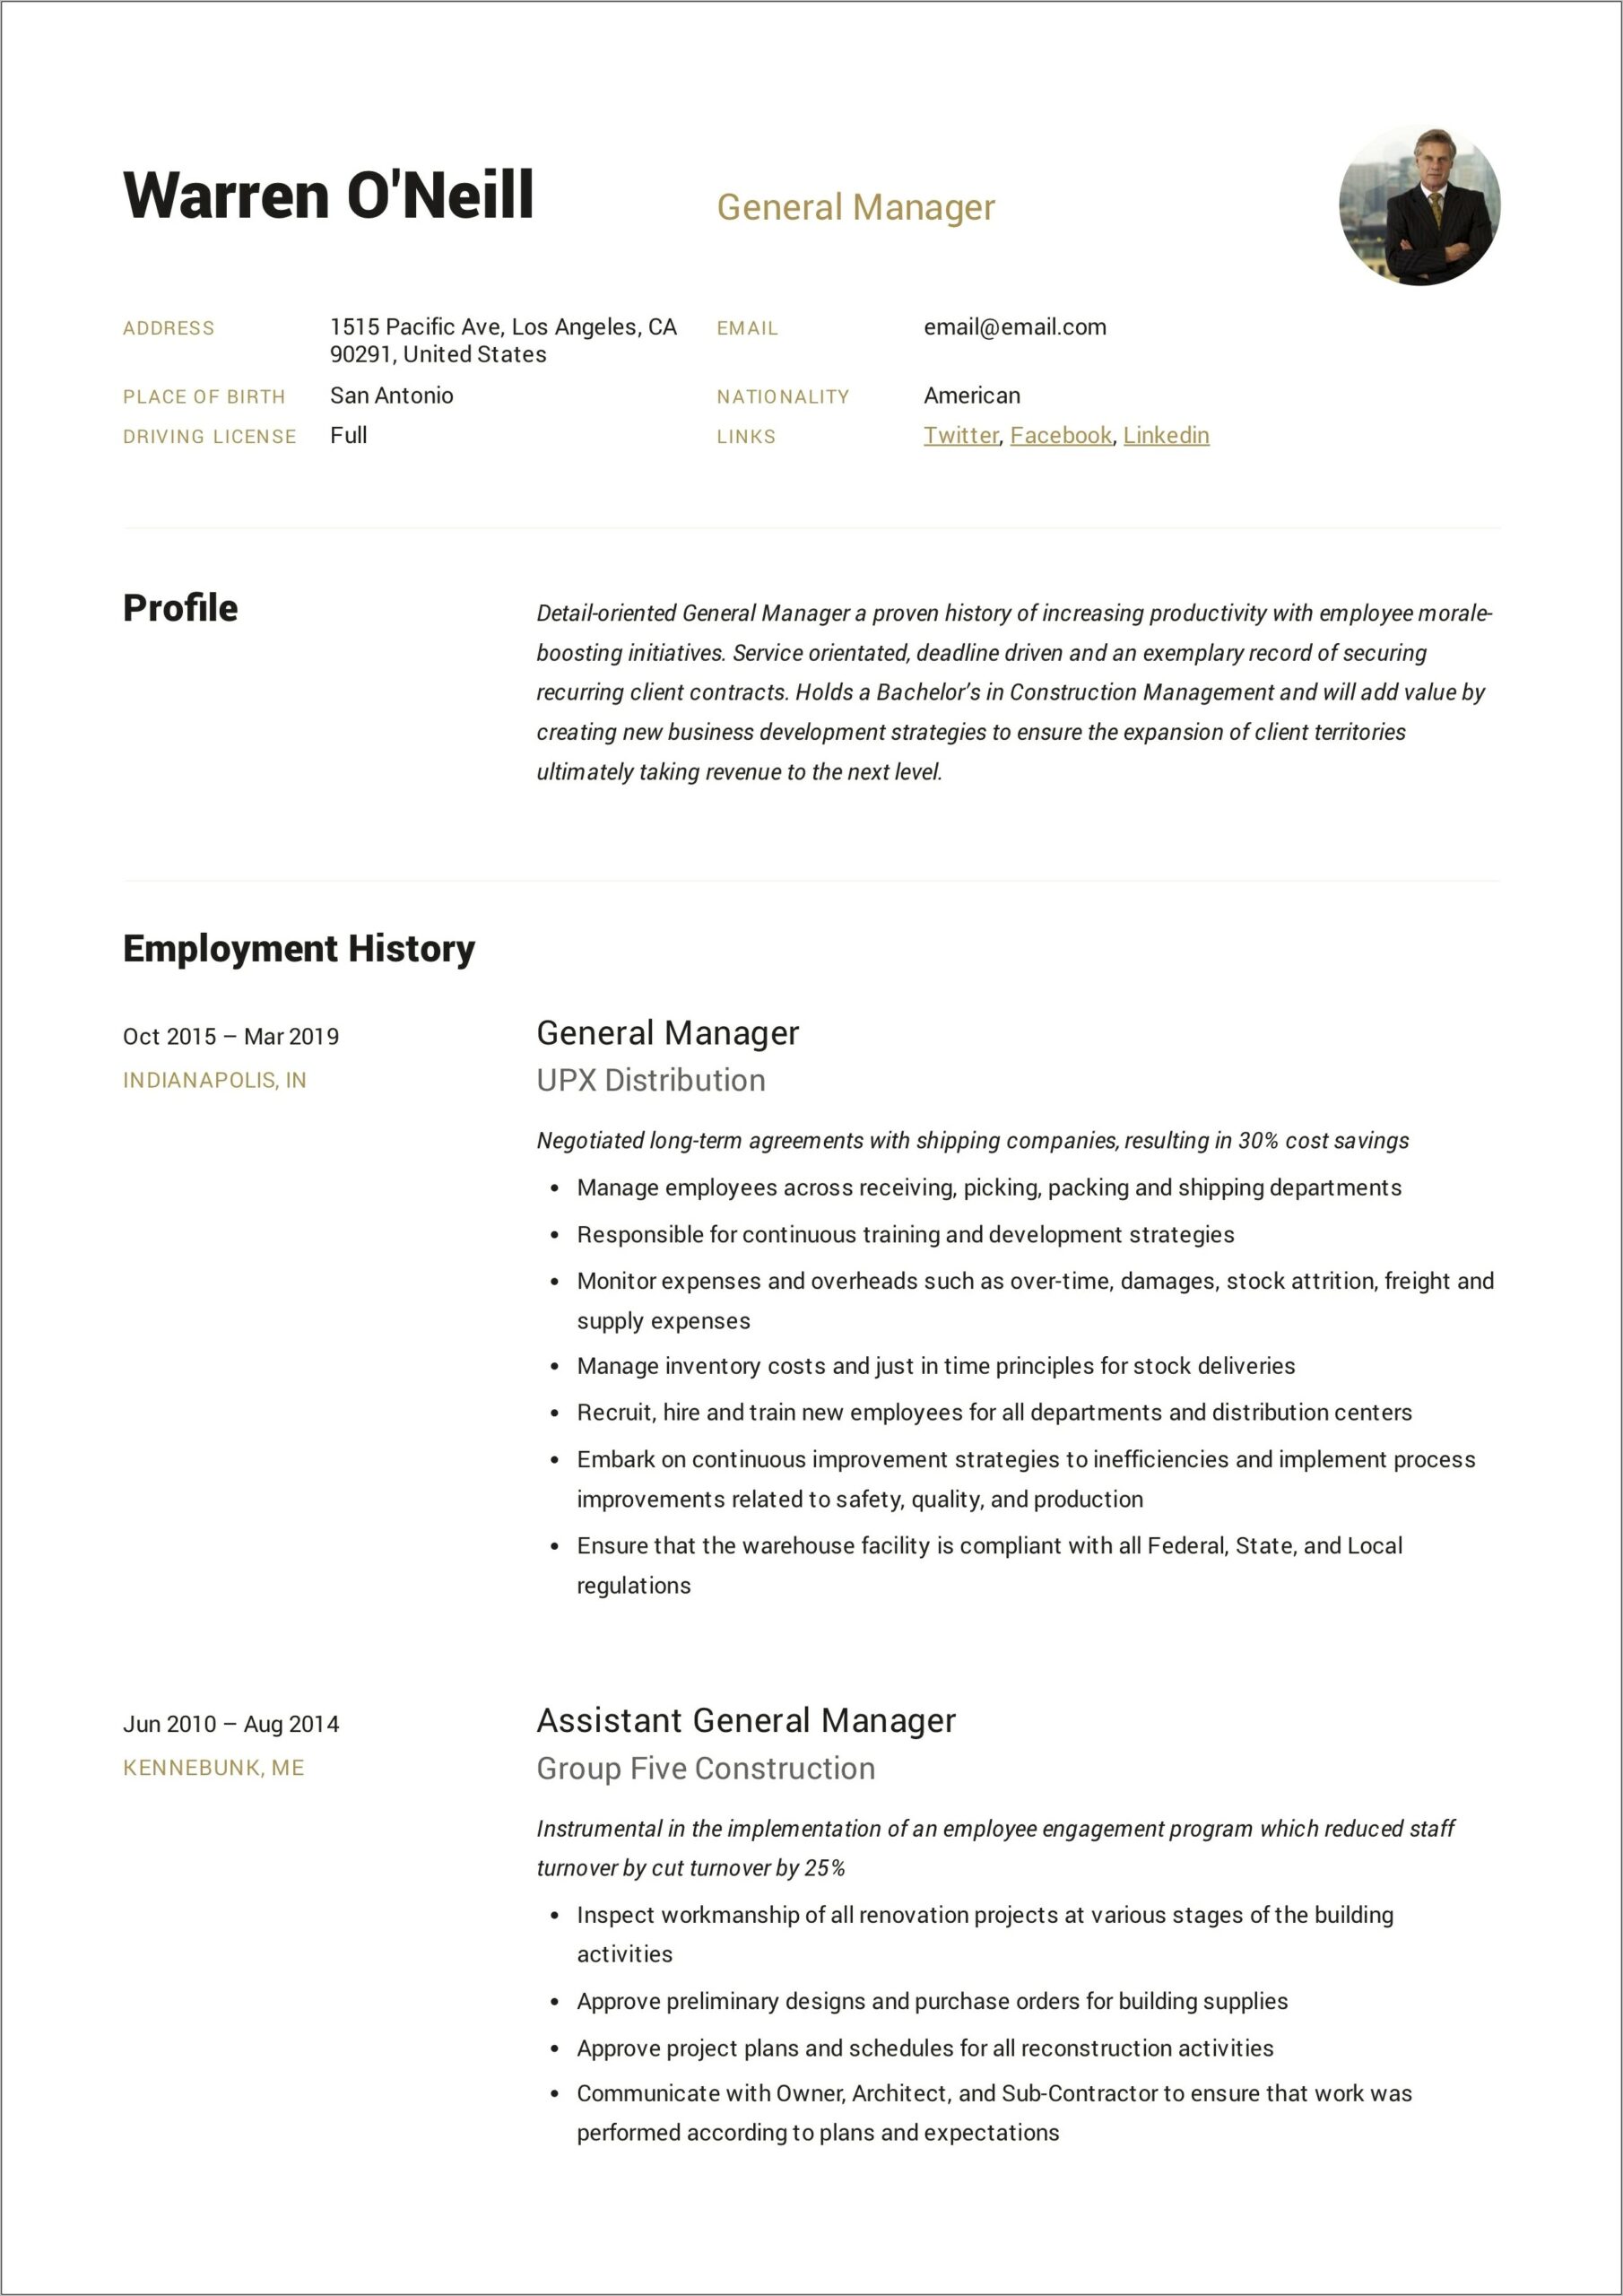 Draft Employee Handbook For General Manager Resume Skills